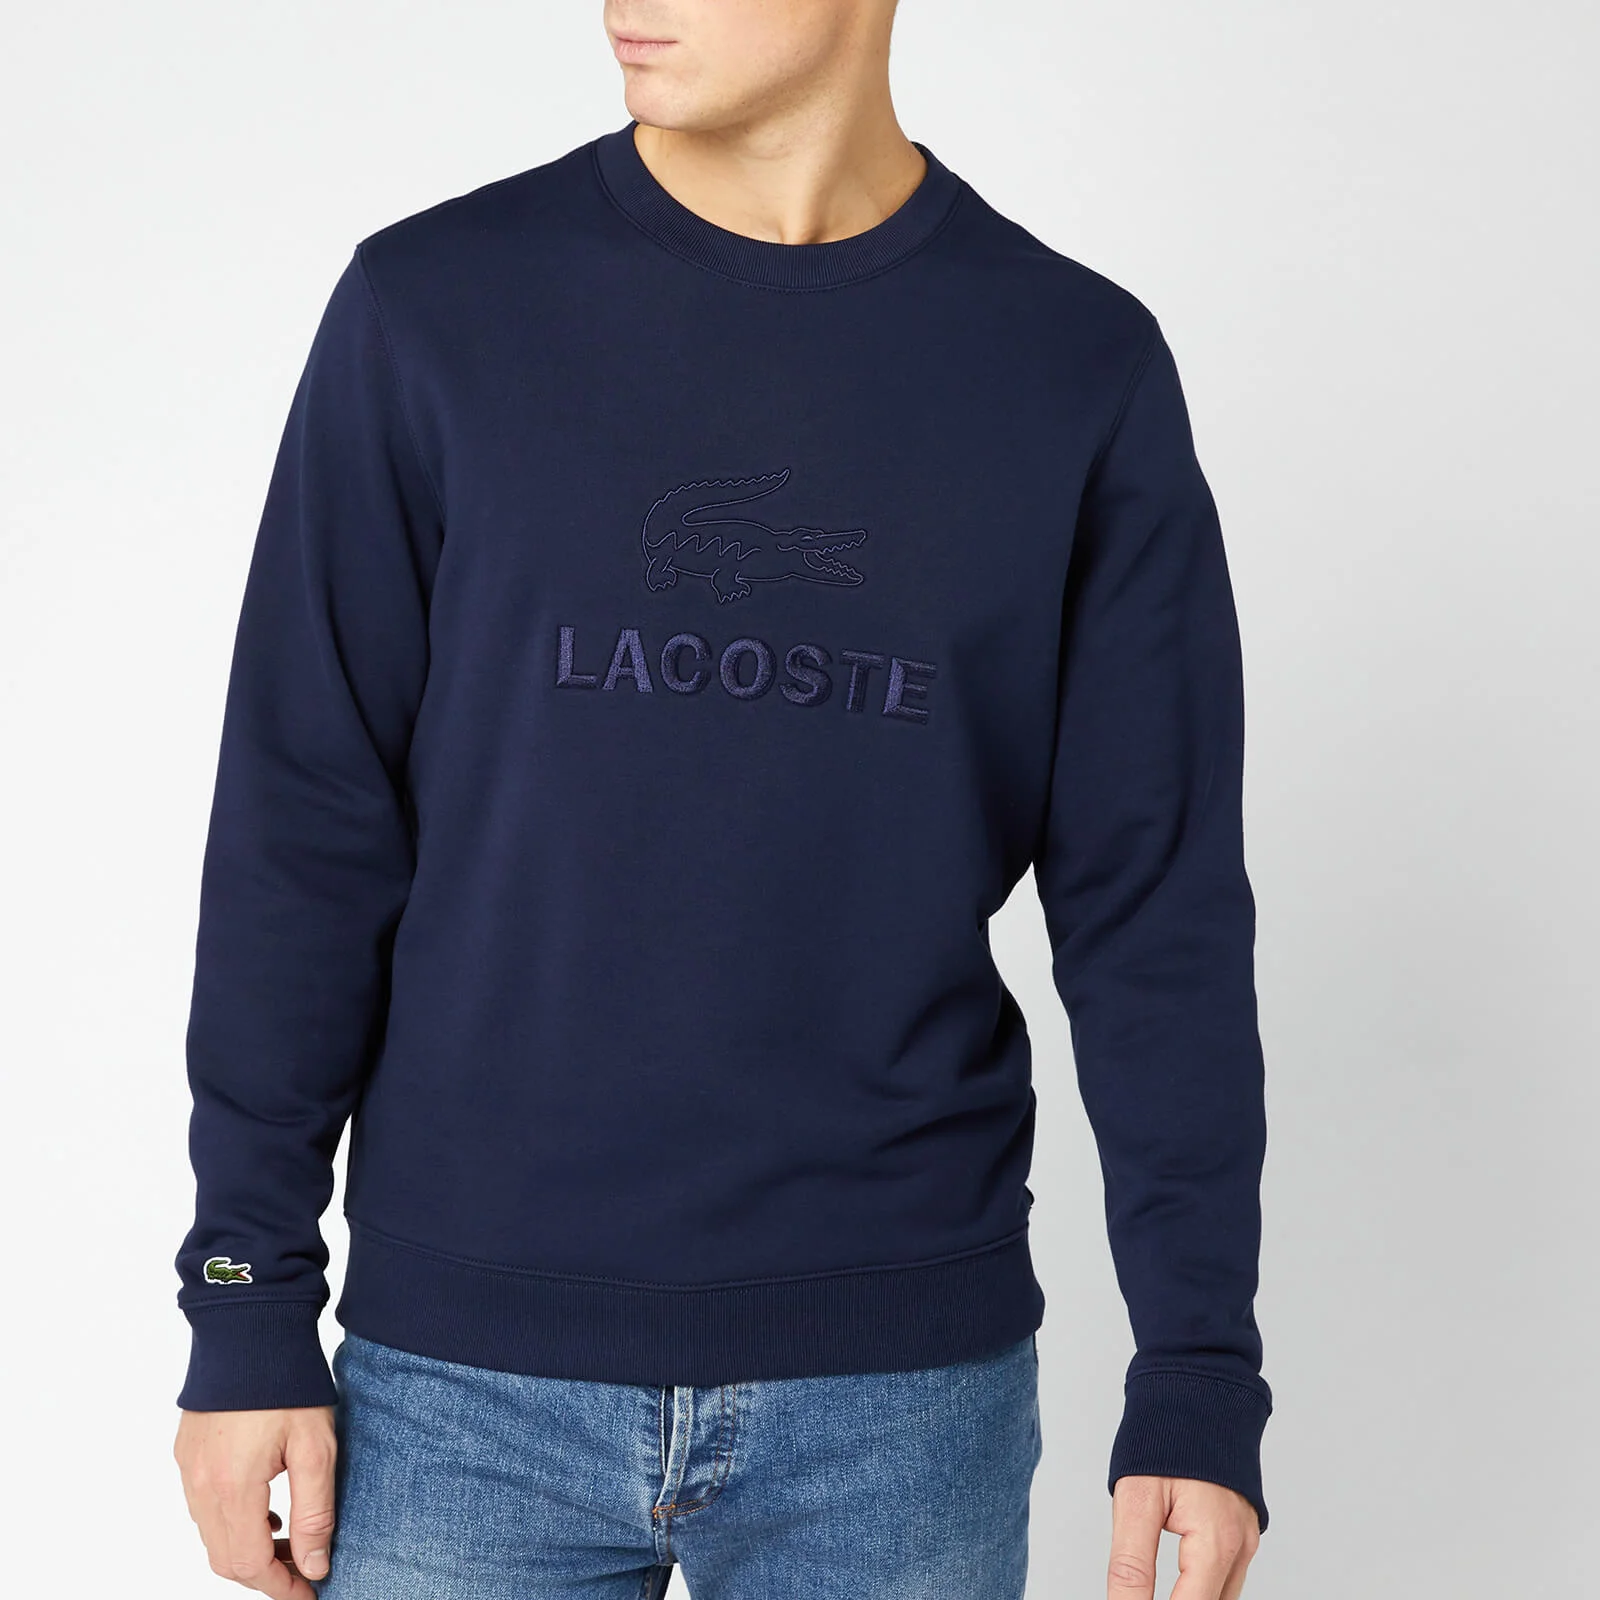 Lacoste Men's Tonal Croc Sweatshirt - Marine Image 1